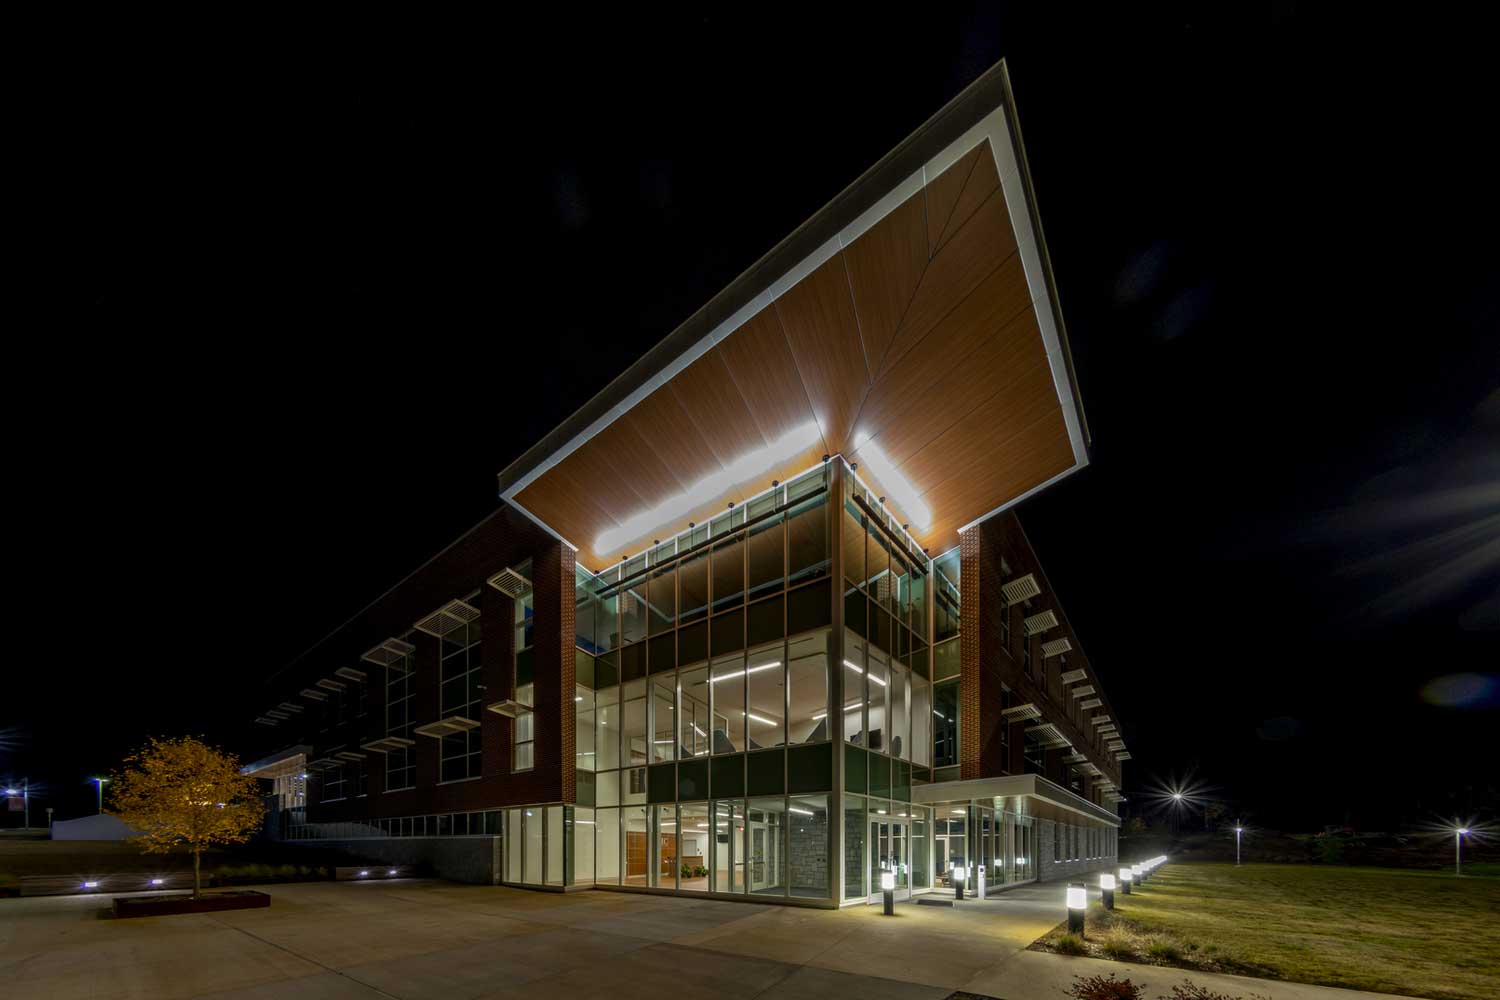 Cartersville Student Center at night